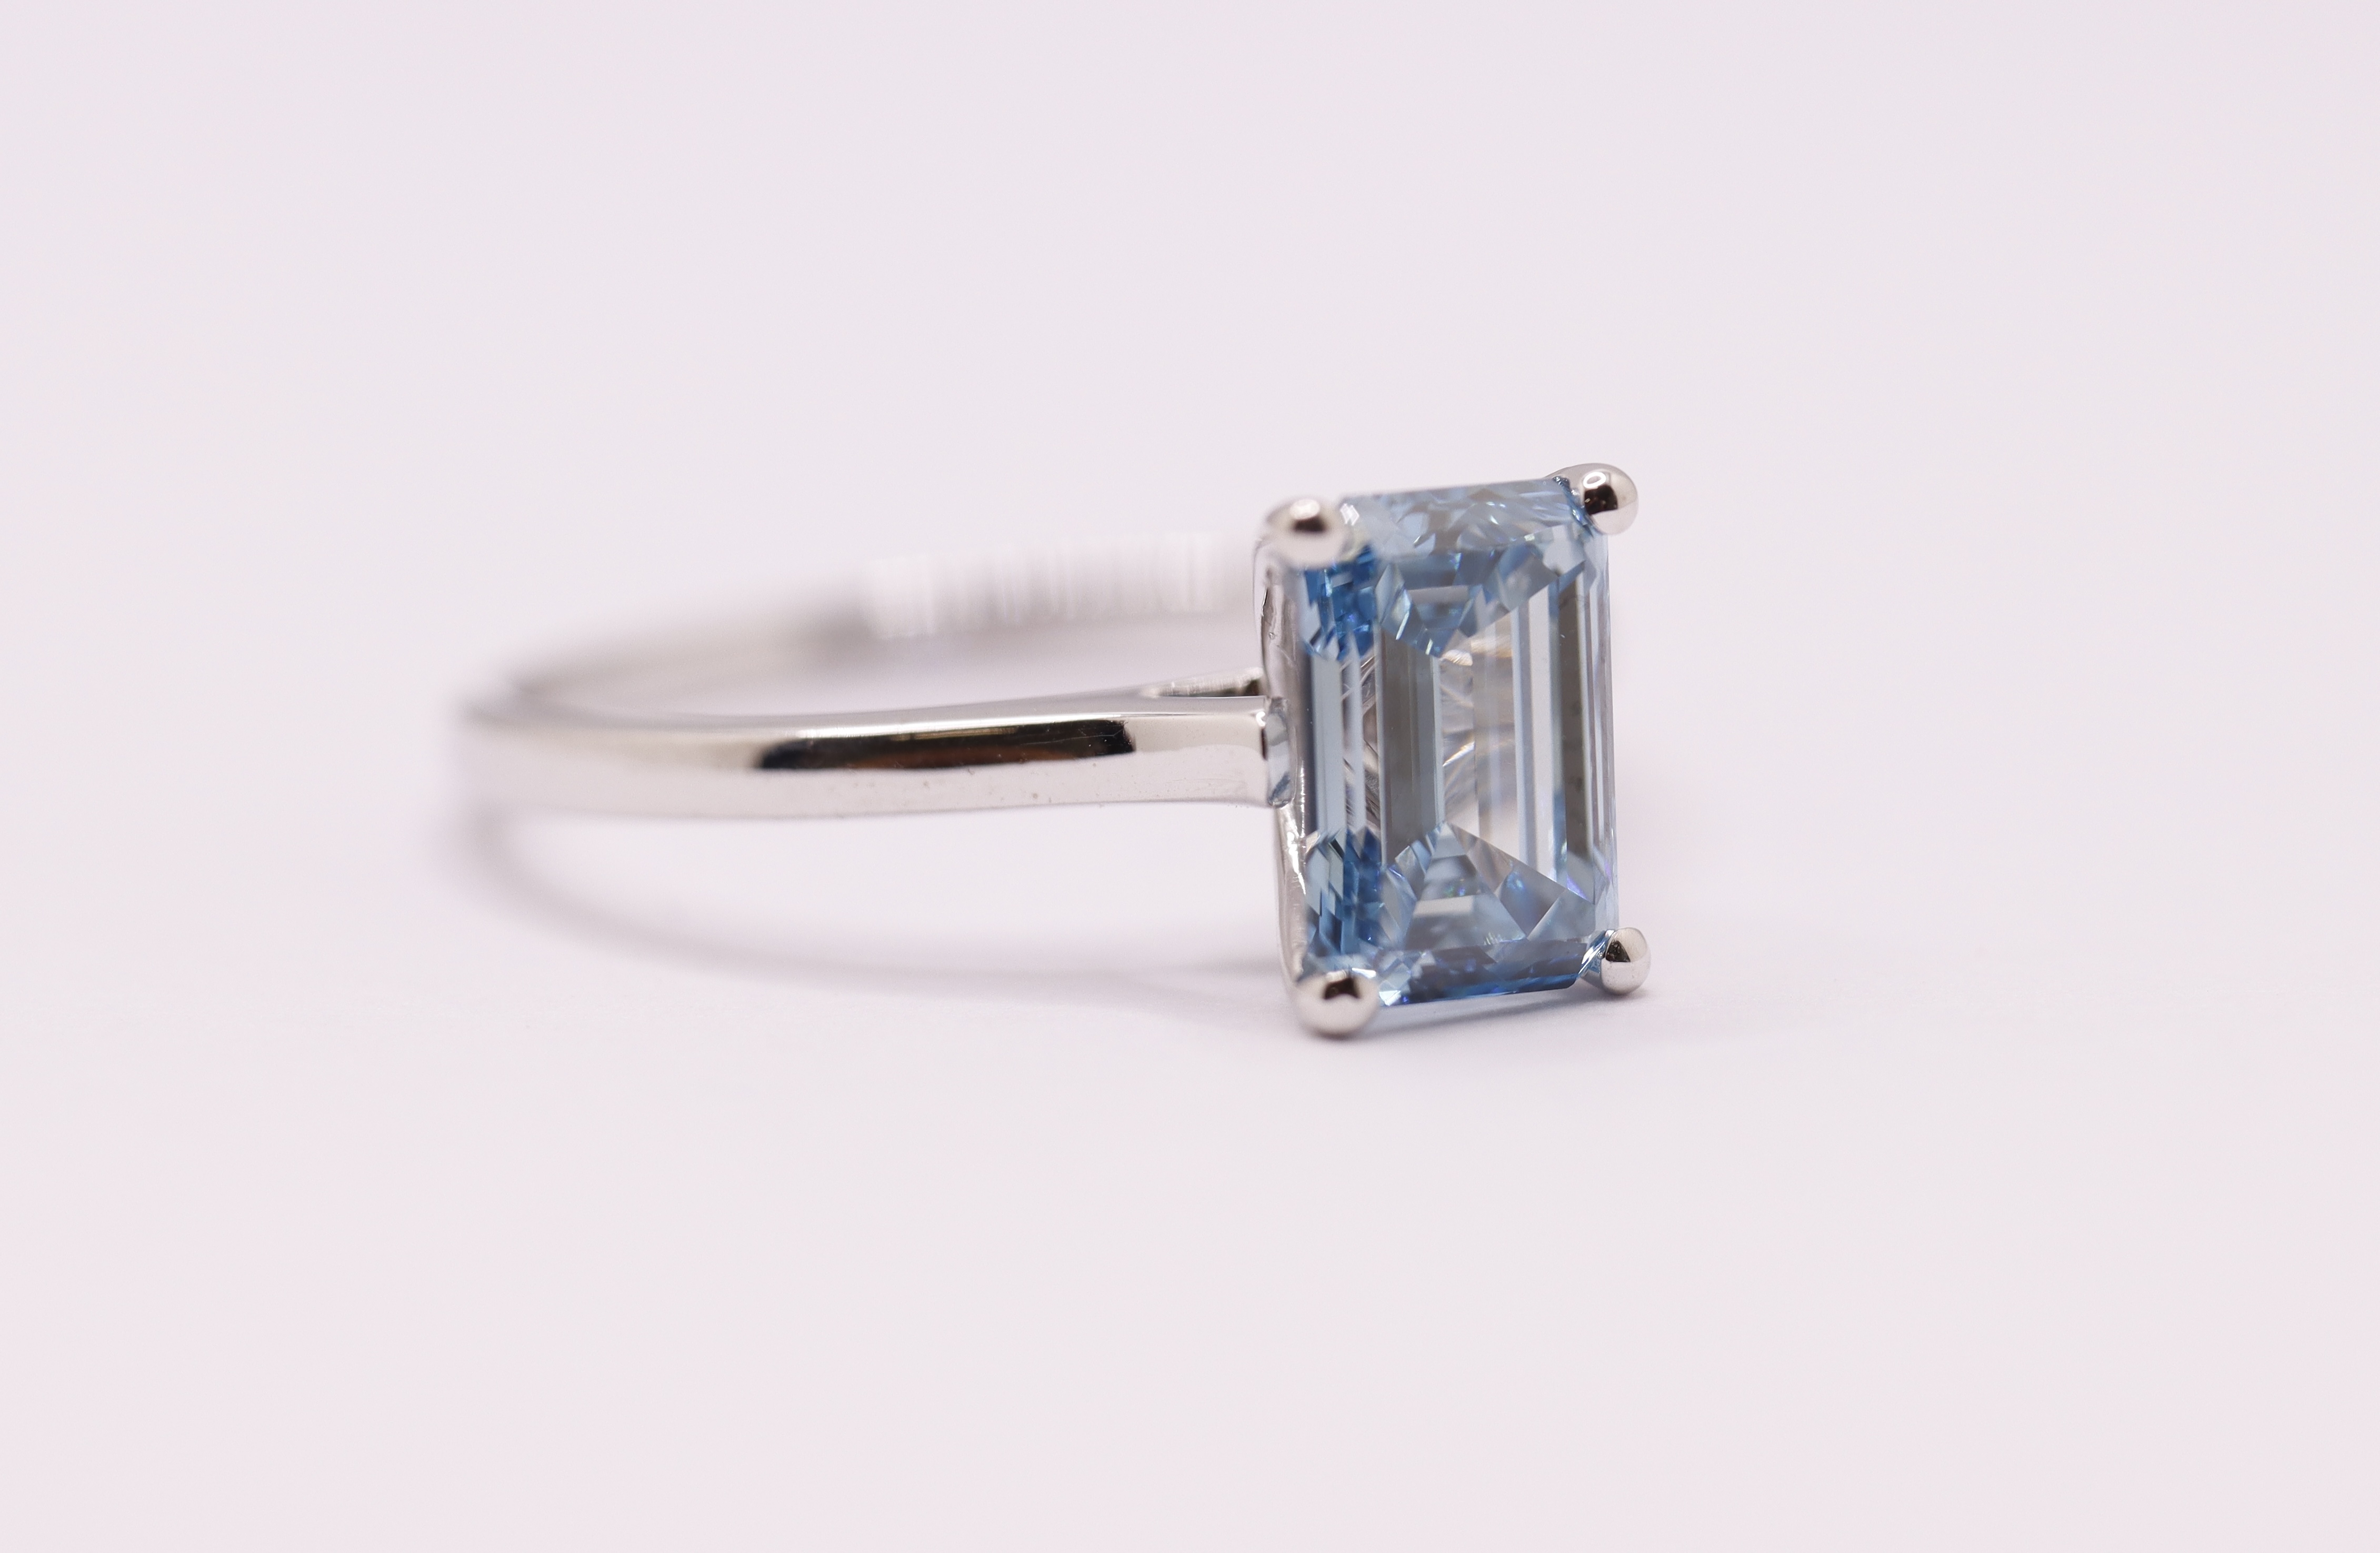 ** ON SALE ** Fancy Blue Emerald Cut 1.50 Carat Diamond 18Kt White Gold Ring -VS1 Clarity - Image 7 of 7